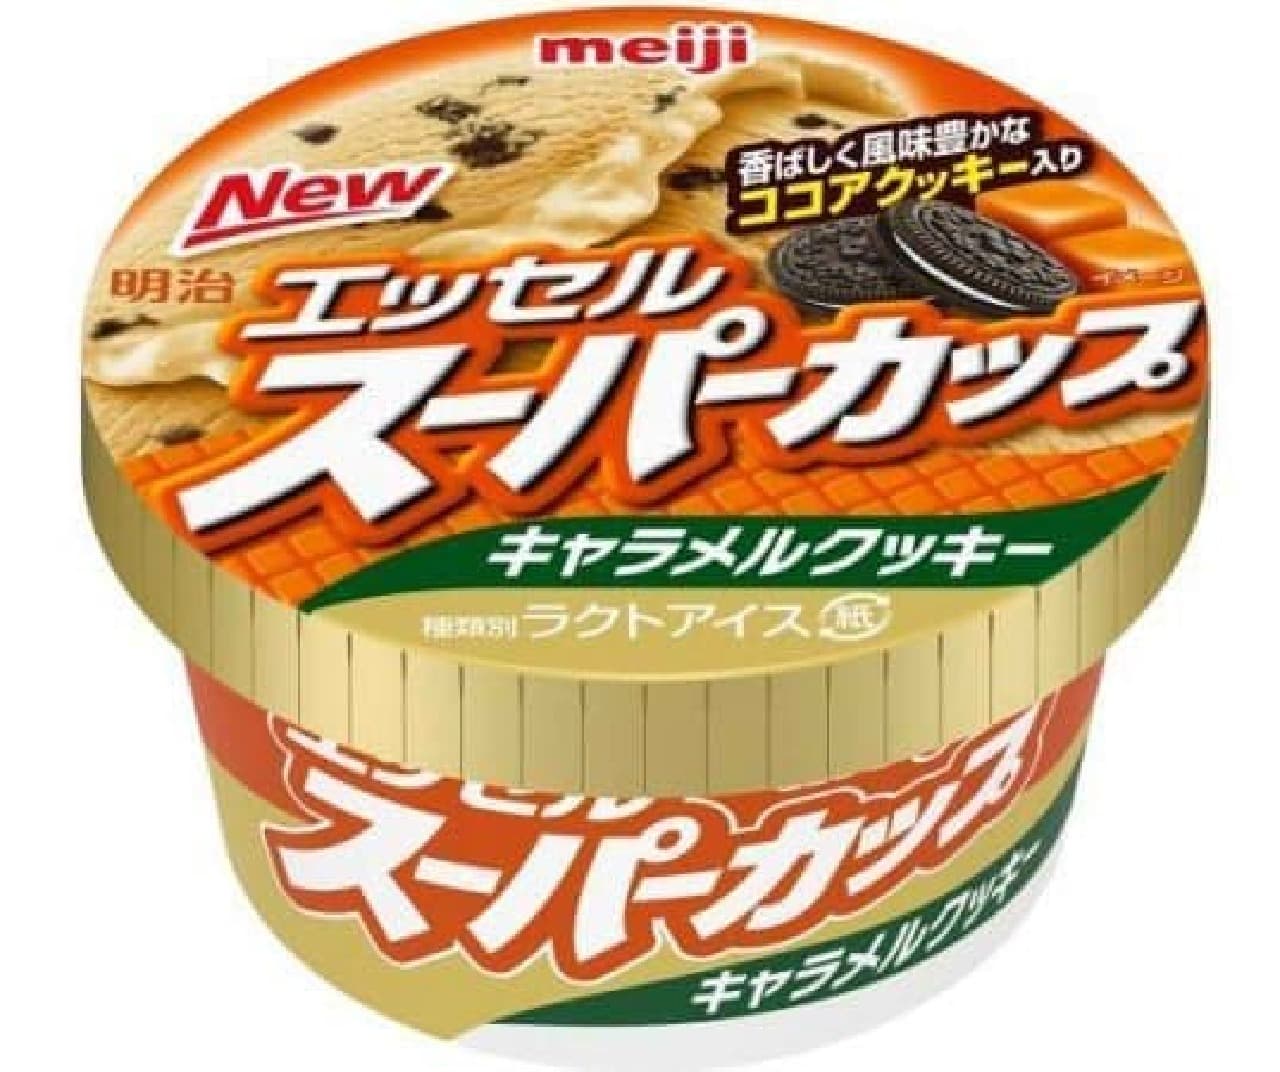 Meiji Essel Super Cup Caramel Cookie